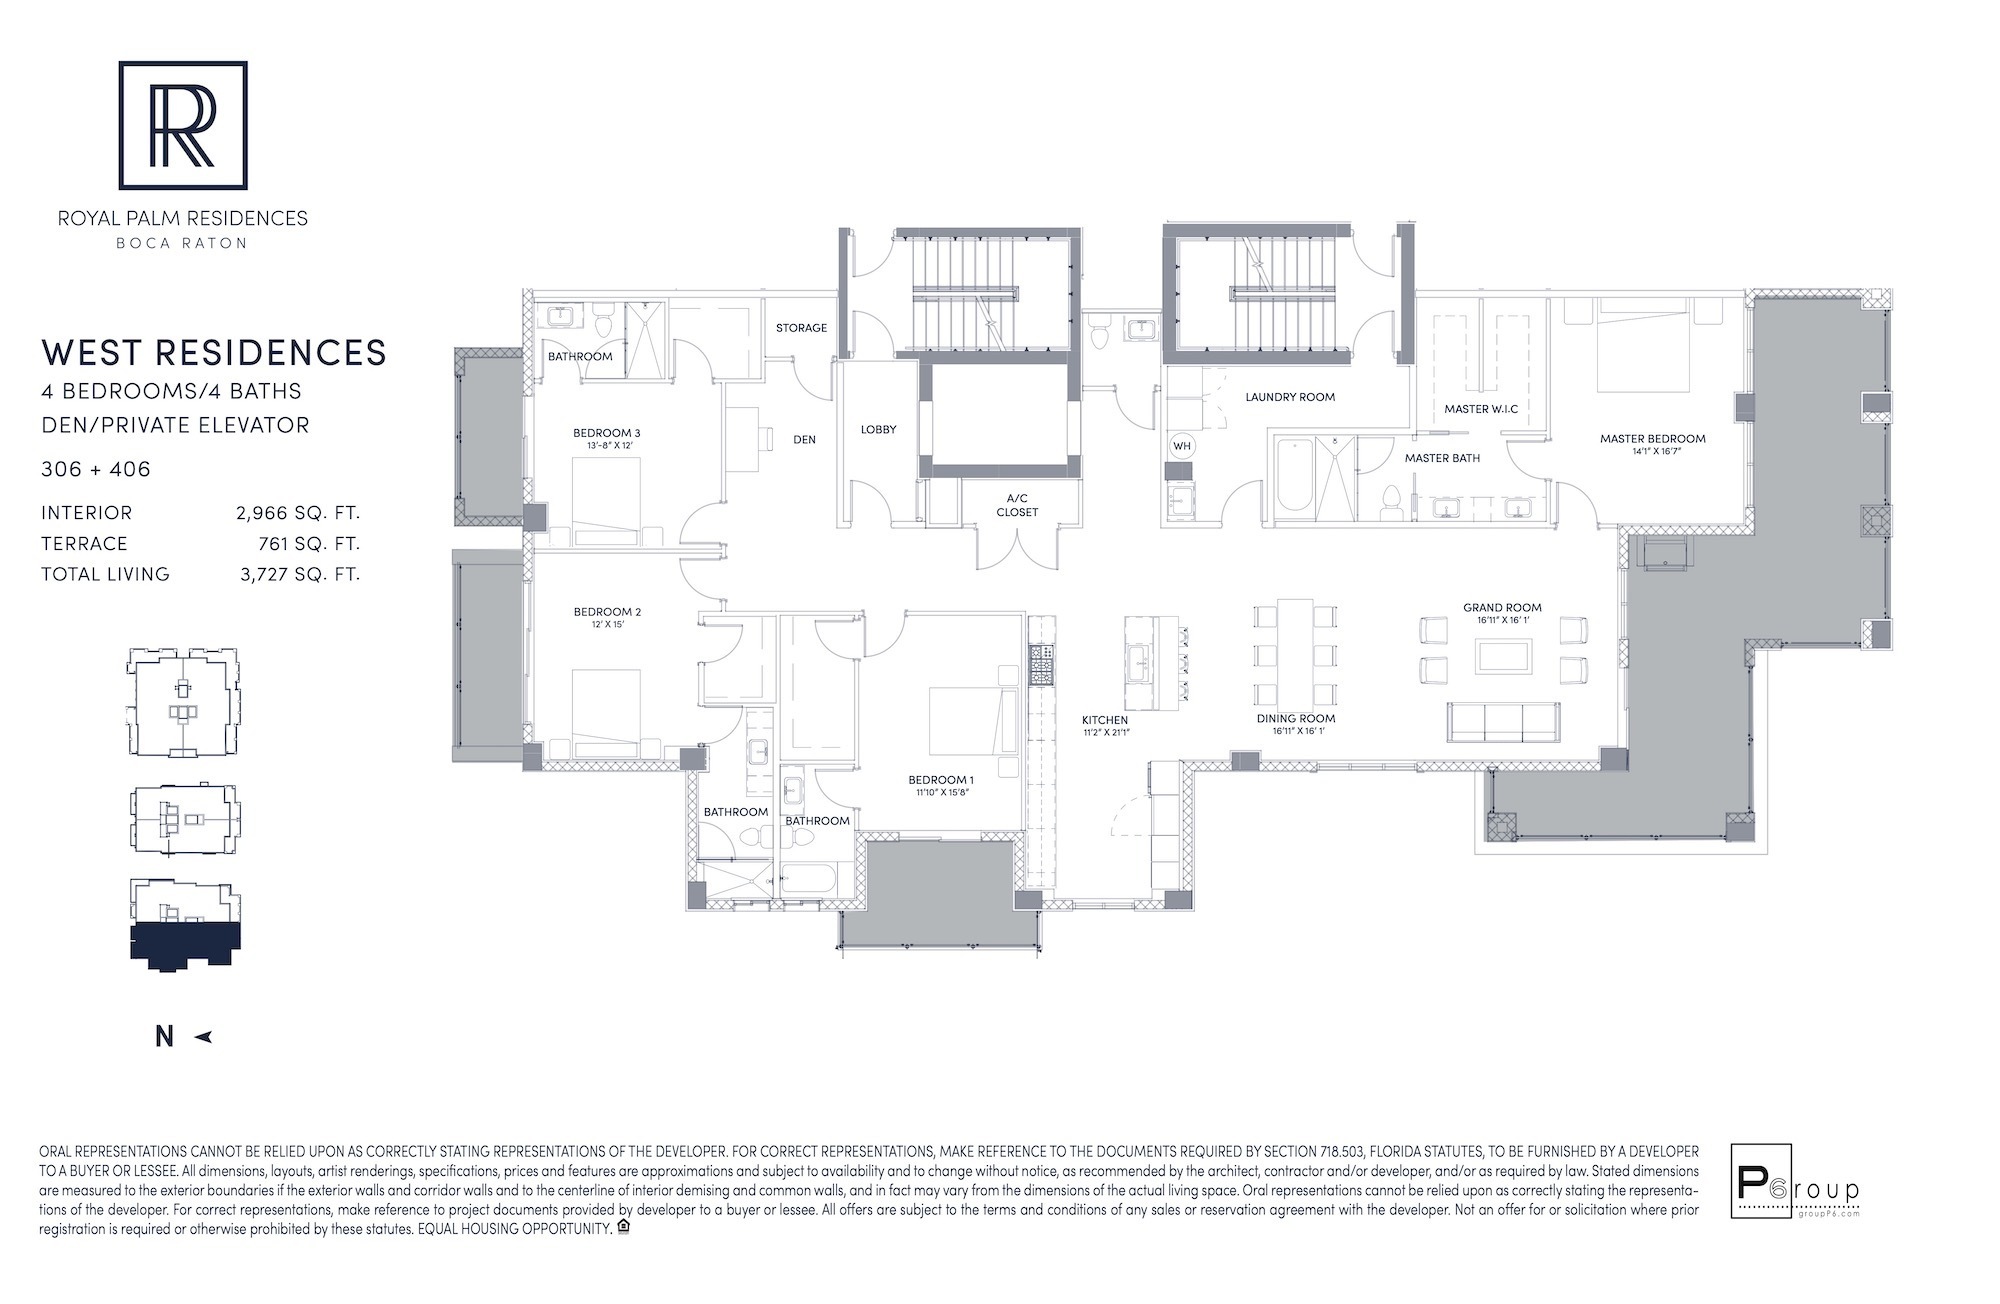 Floor Plan for Royal Palm Residences Floorplans, West Residences 306 + 406